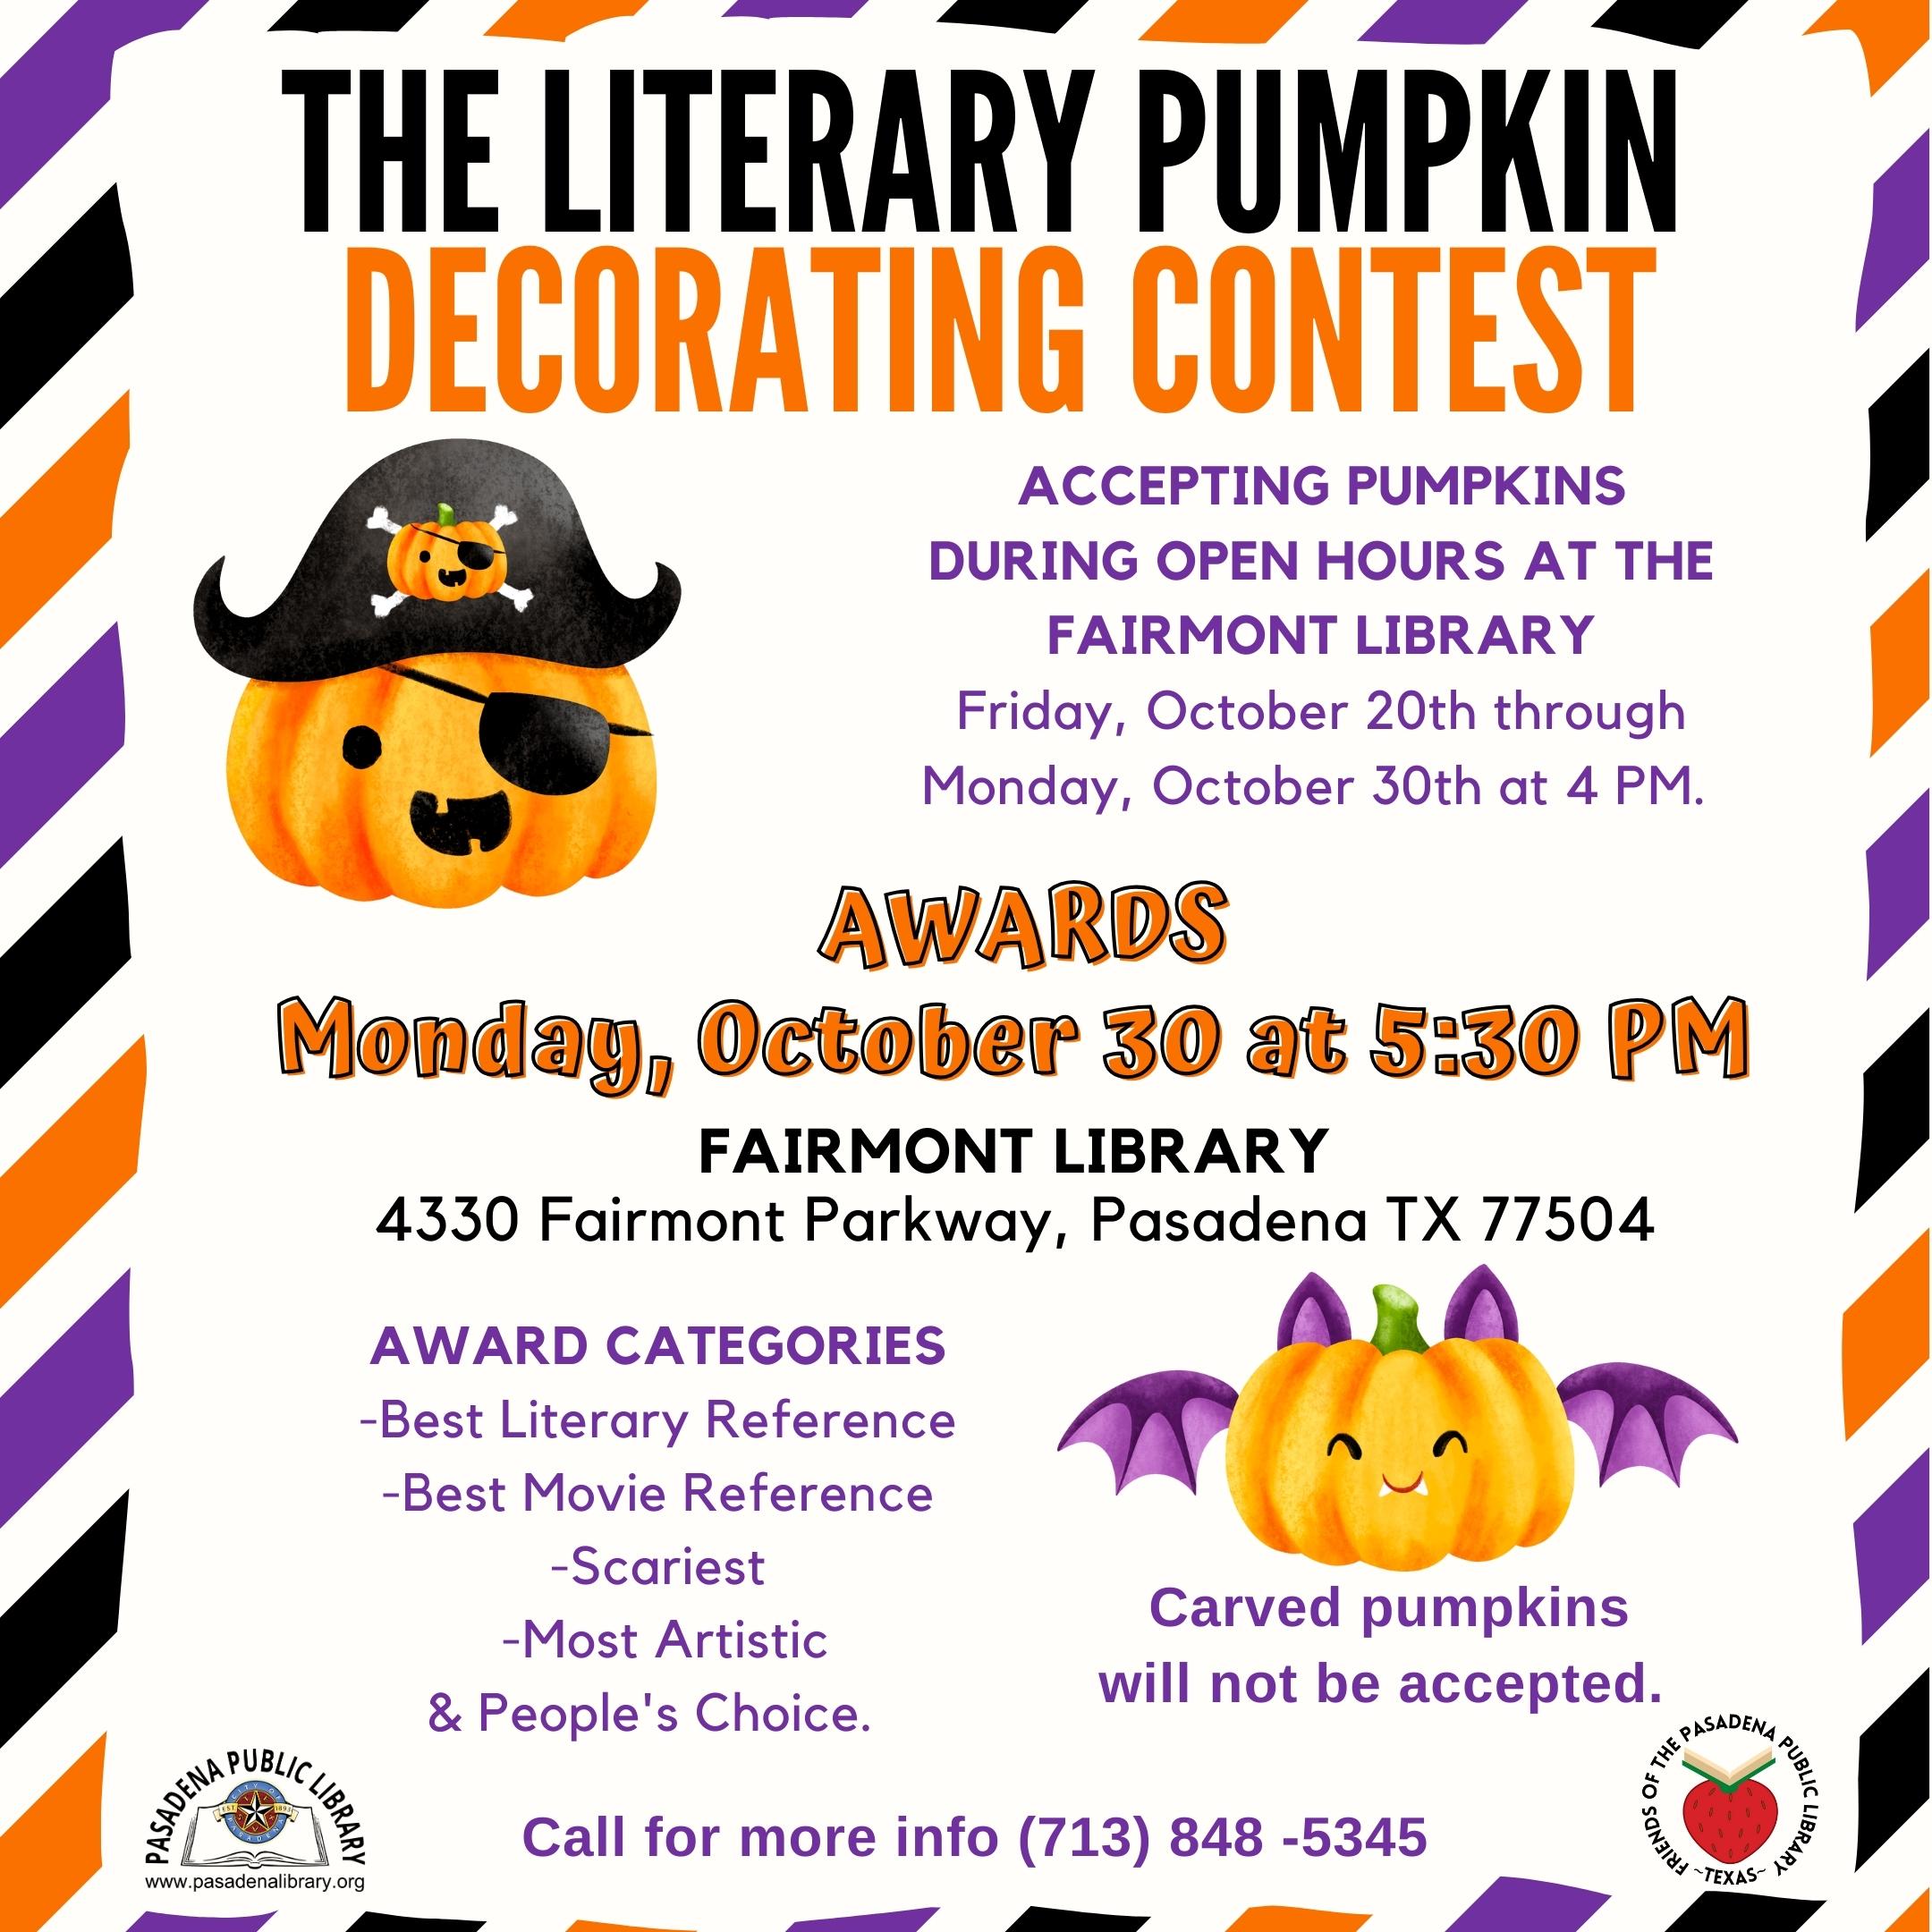 Literacy Pumpkin Decorating Contest